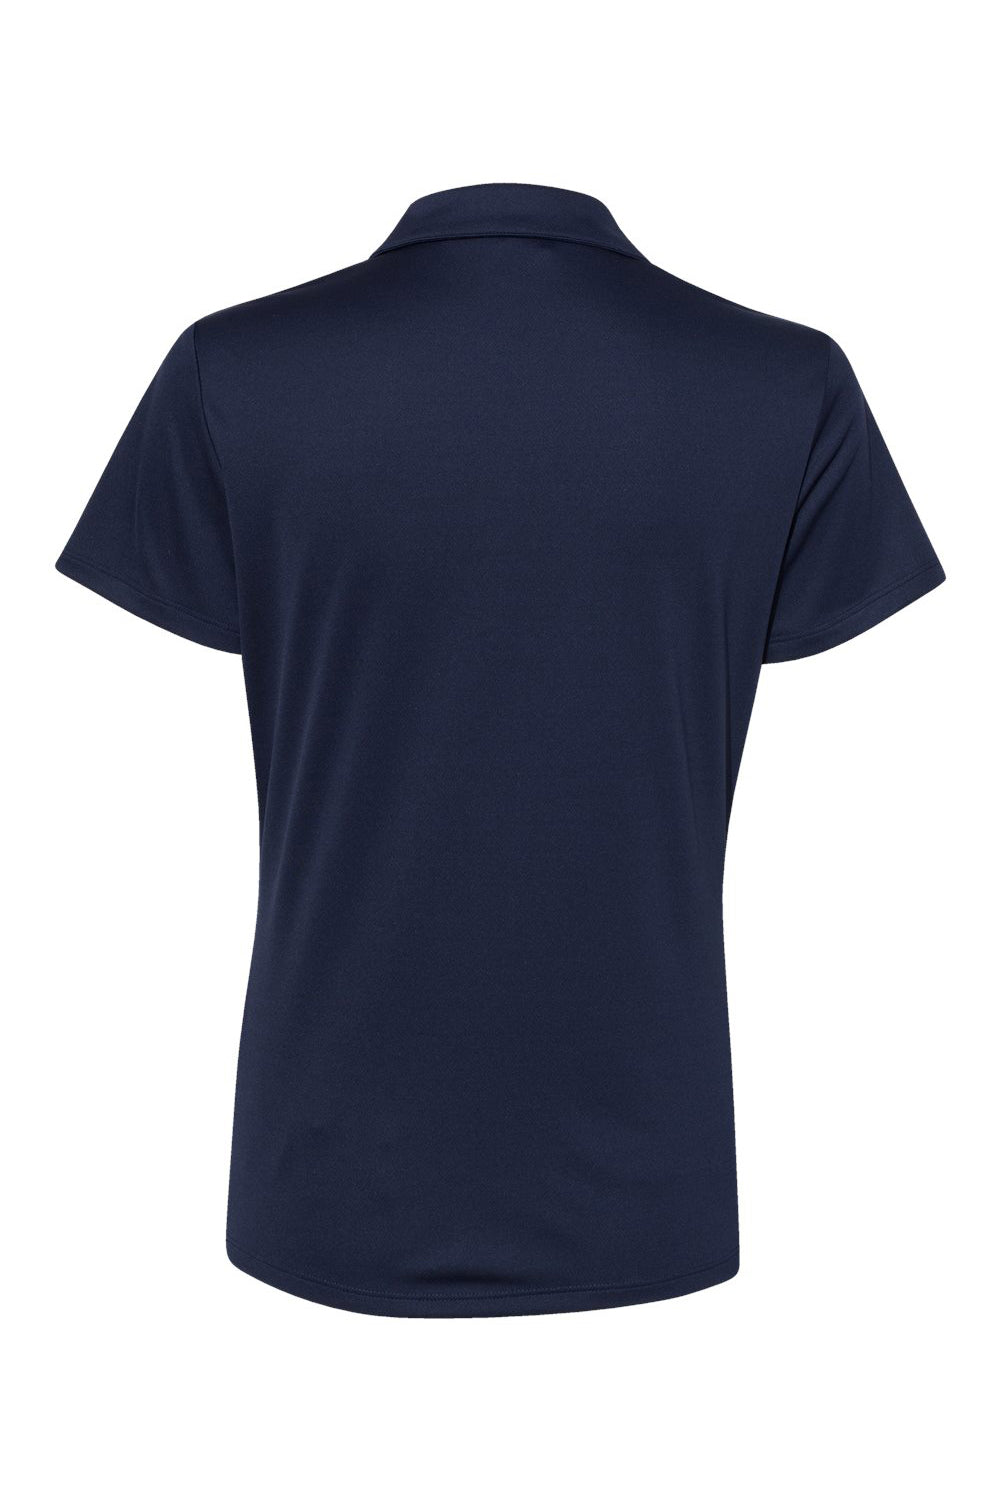 Adidas A231 Womens Performance Short Sleeve Polo Shirt Navy Blue Flat Back